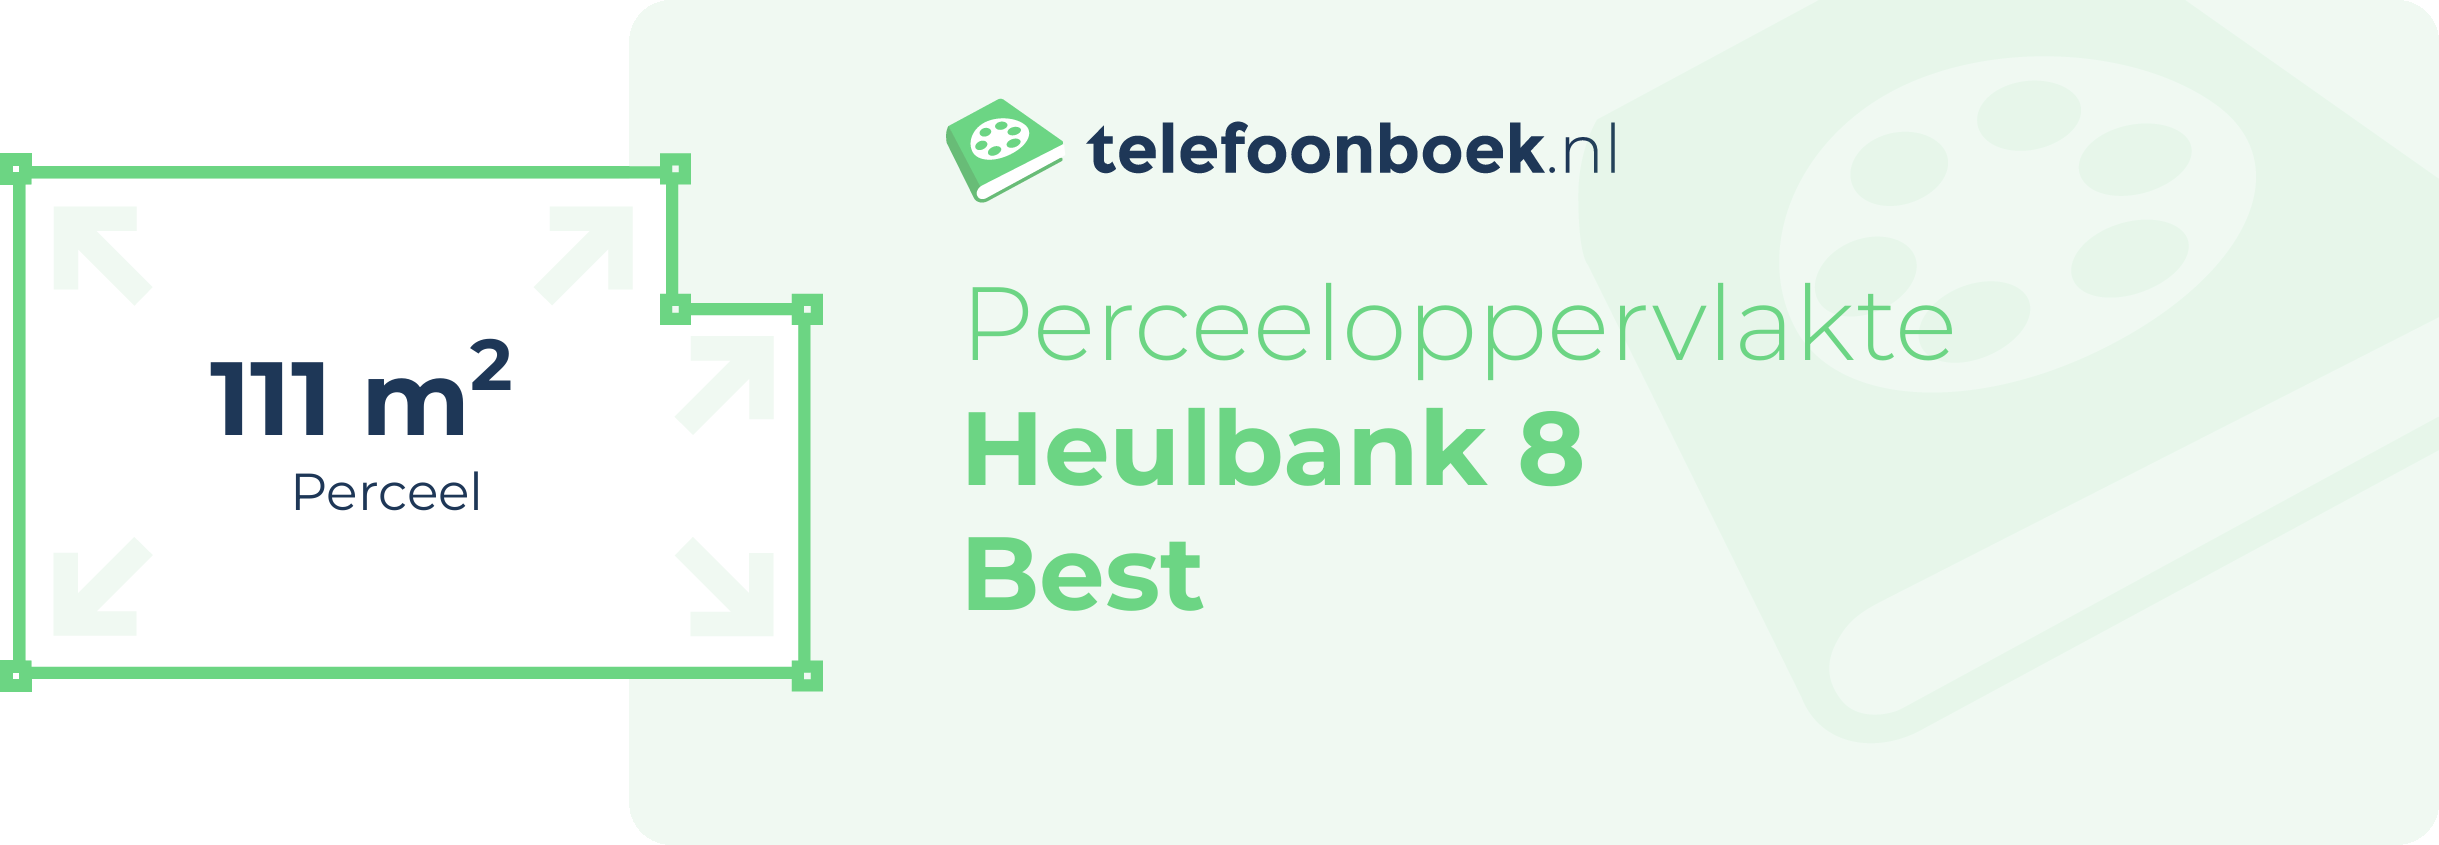 Perceeloppervlakte Heulbank 8 Best